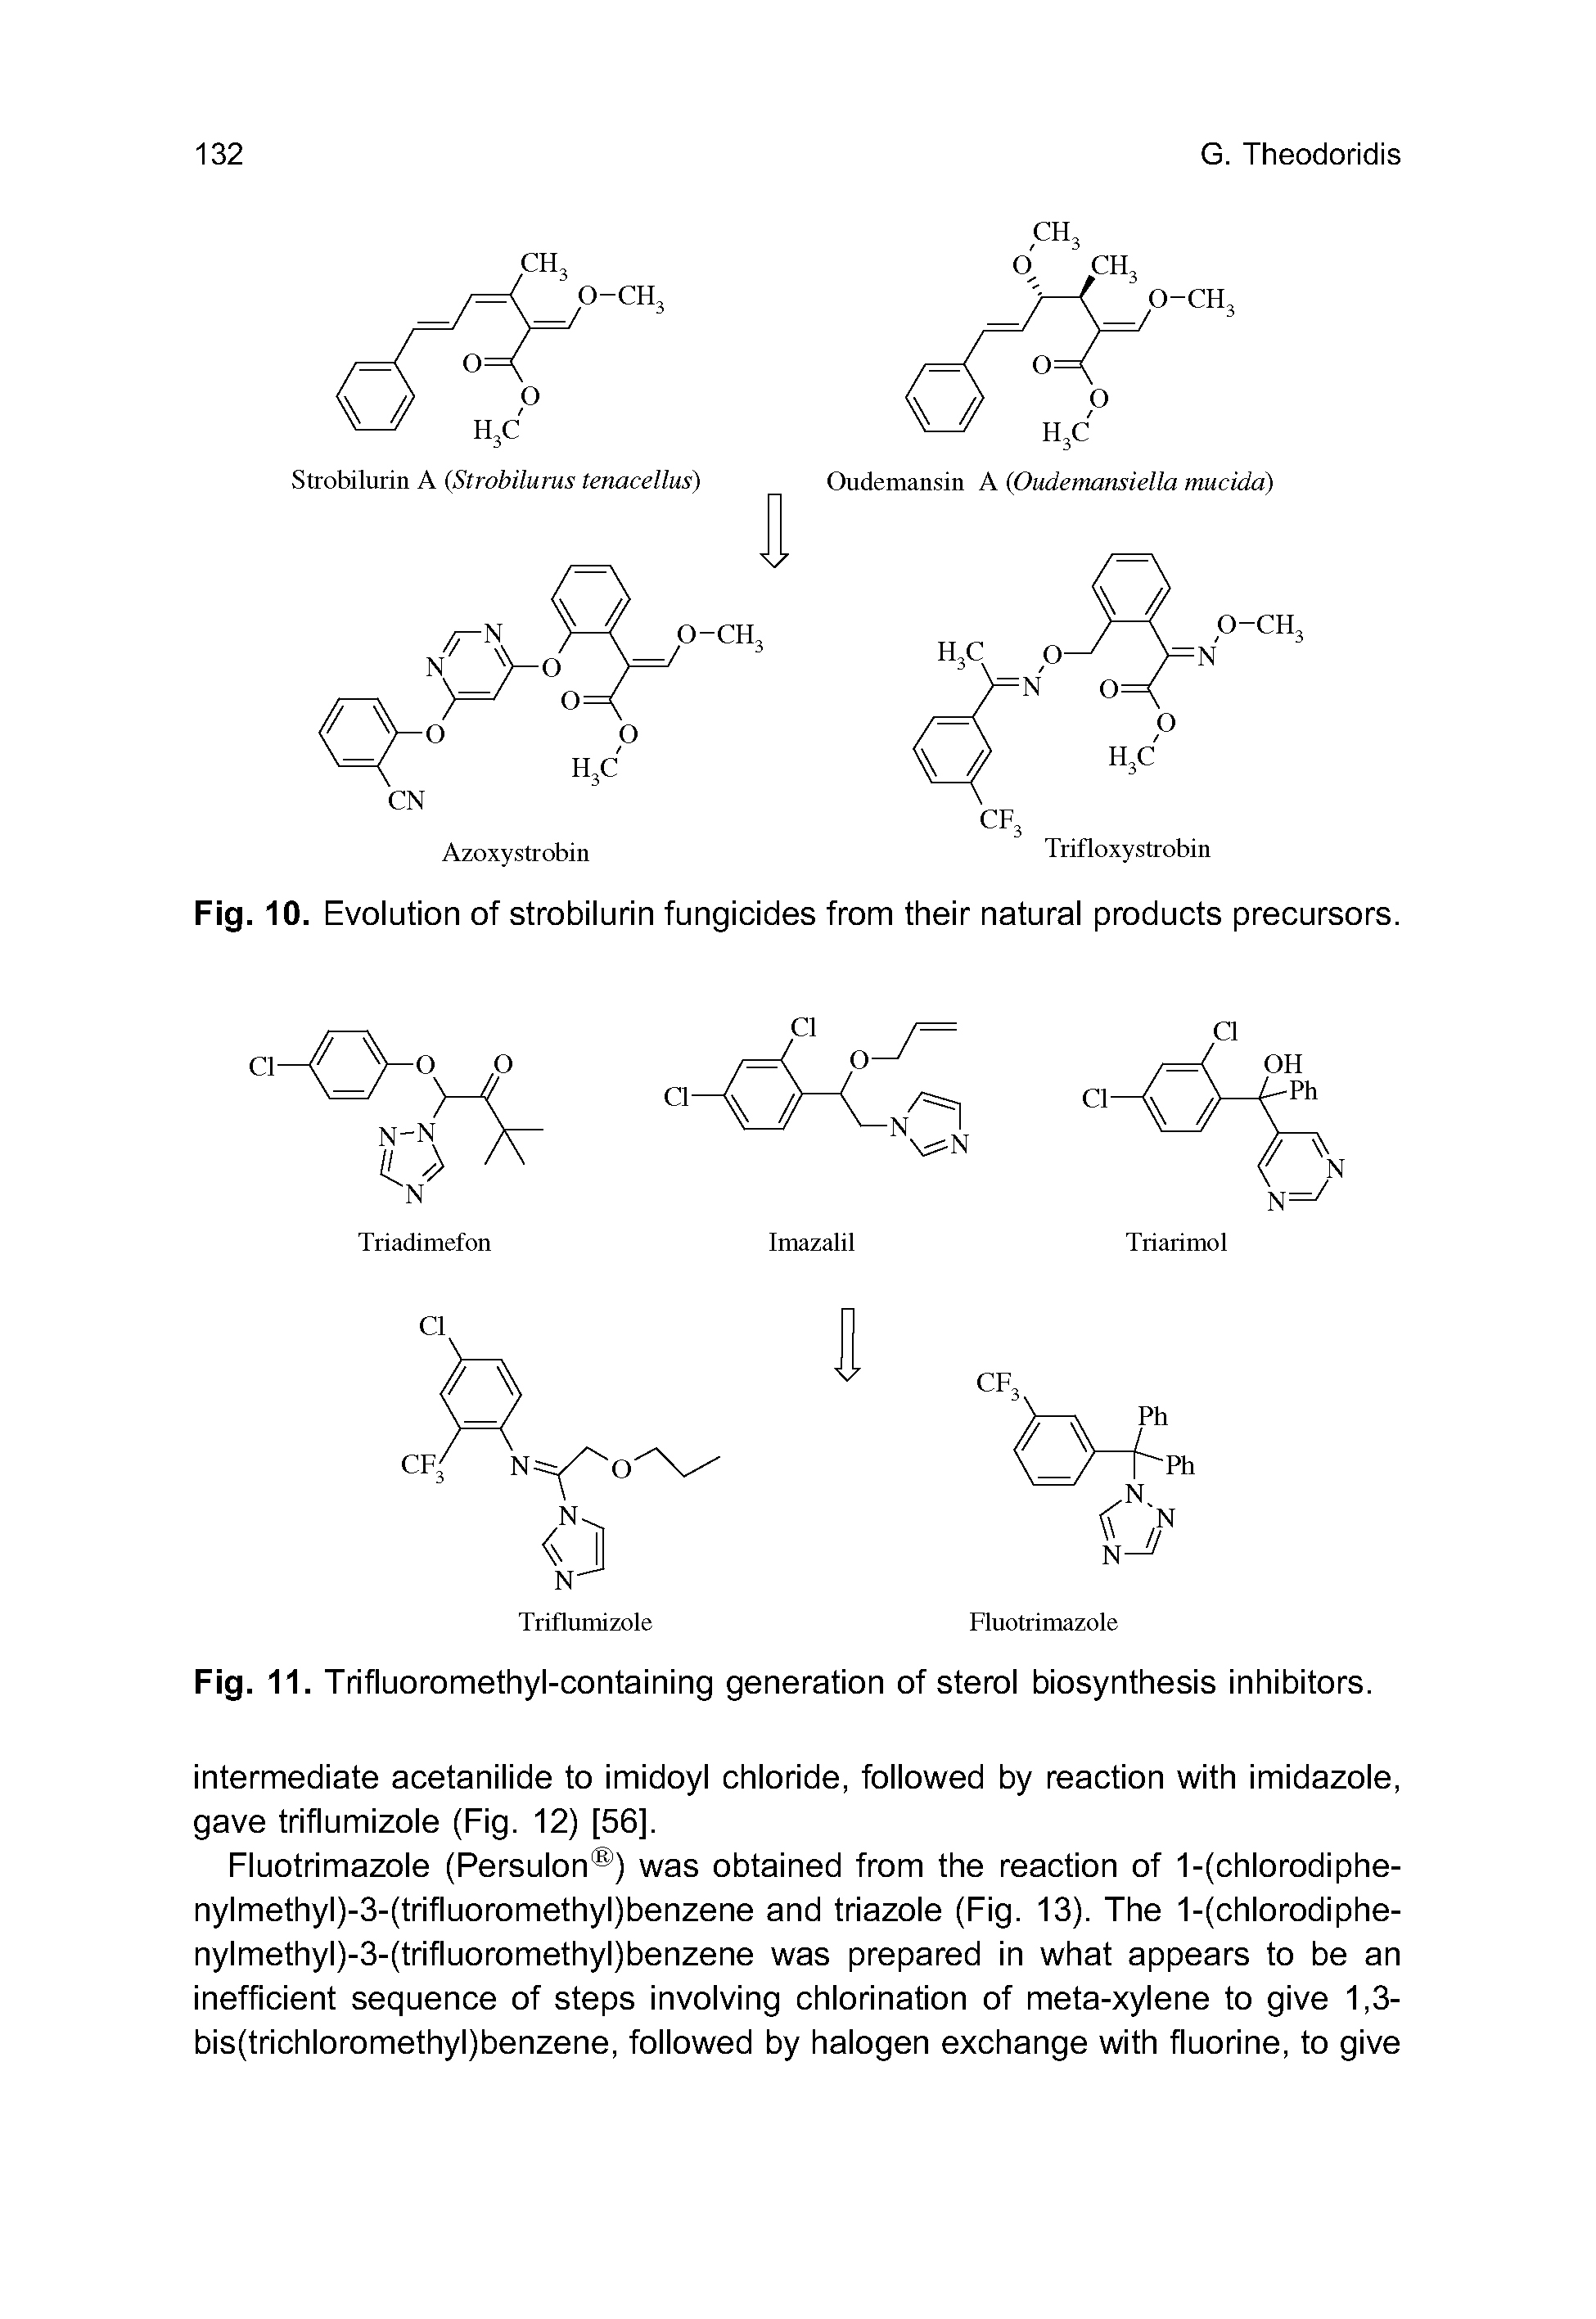 Fig. 11. Trifluoromethyl-containing generation of sterol biosynthesis inhibitors.